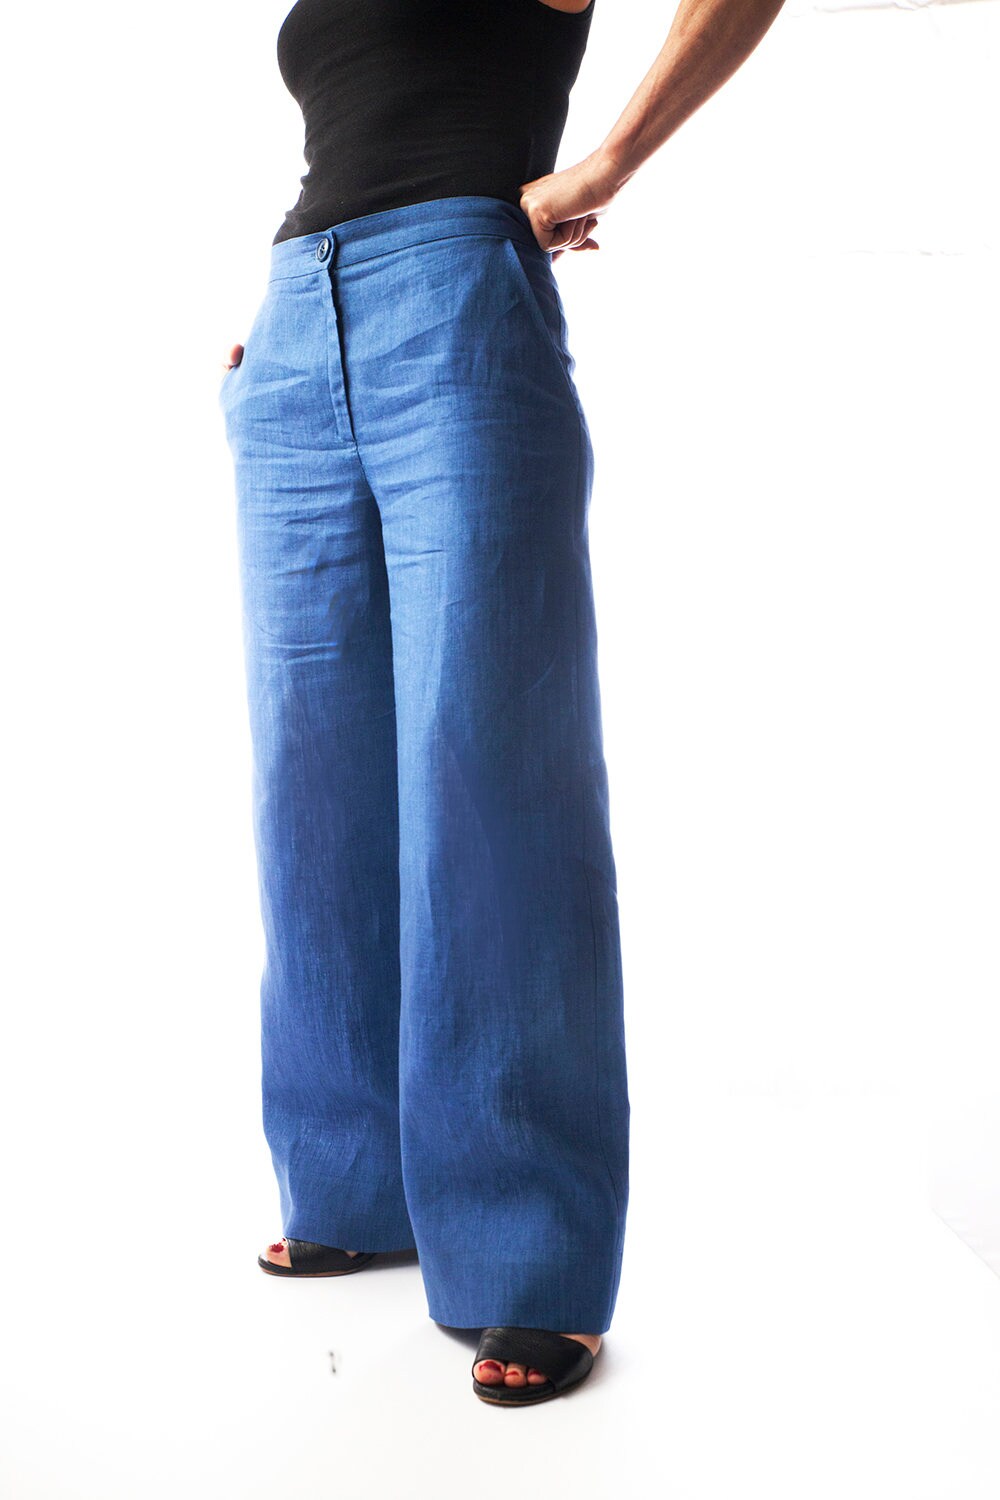 Everyday Pants Sizes 12-20 Paper Pattern | Etsy